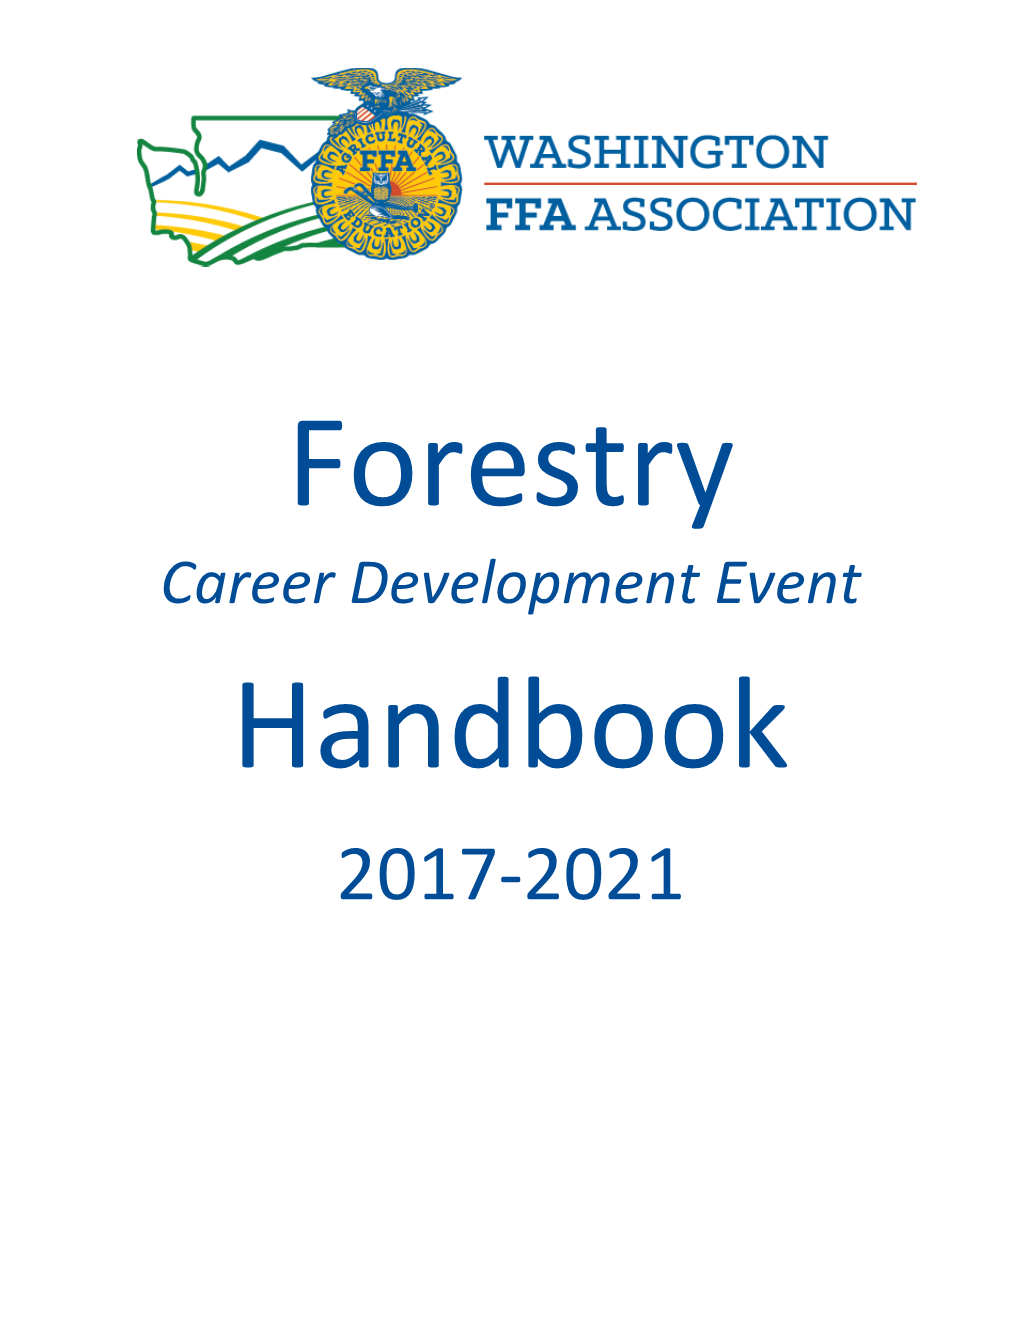 Career Development Event Handbook 2017-2021